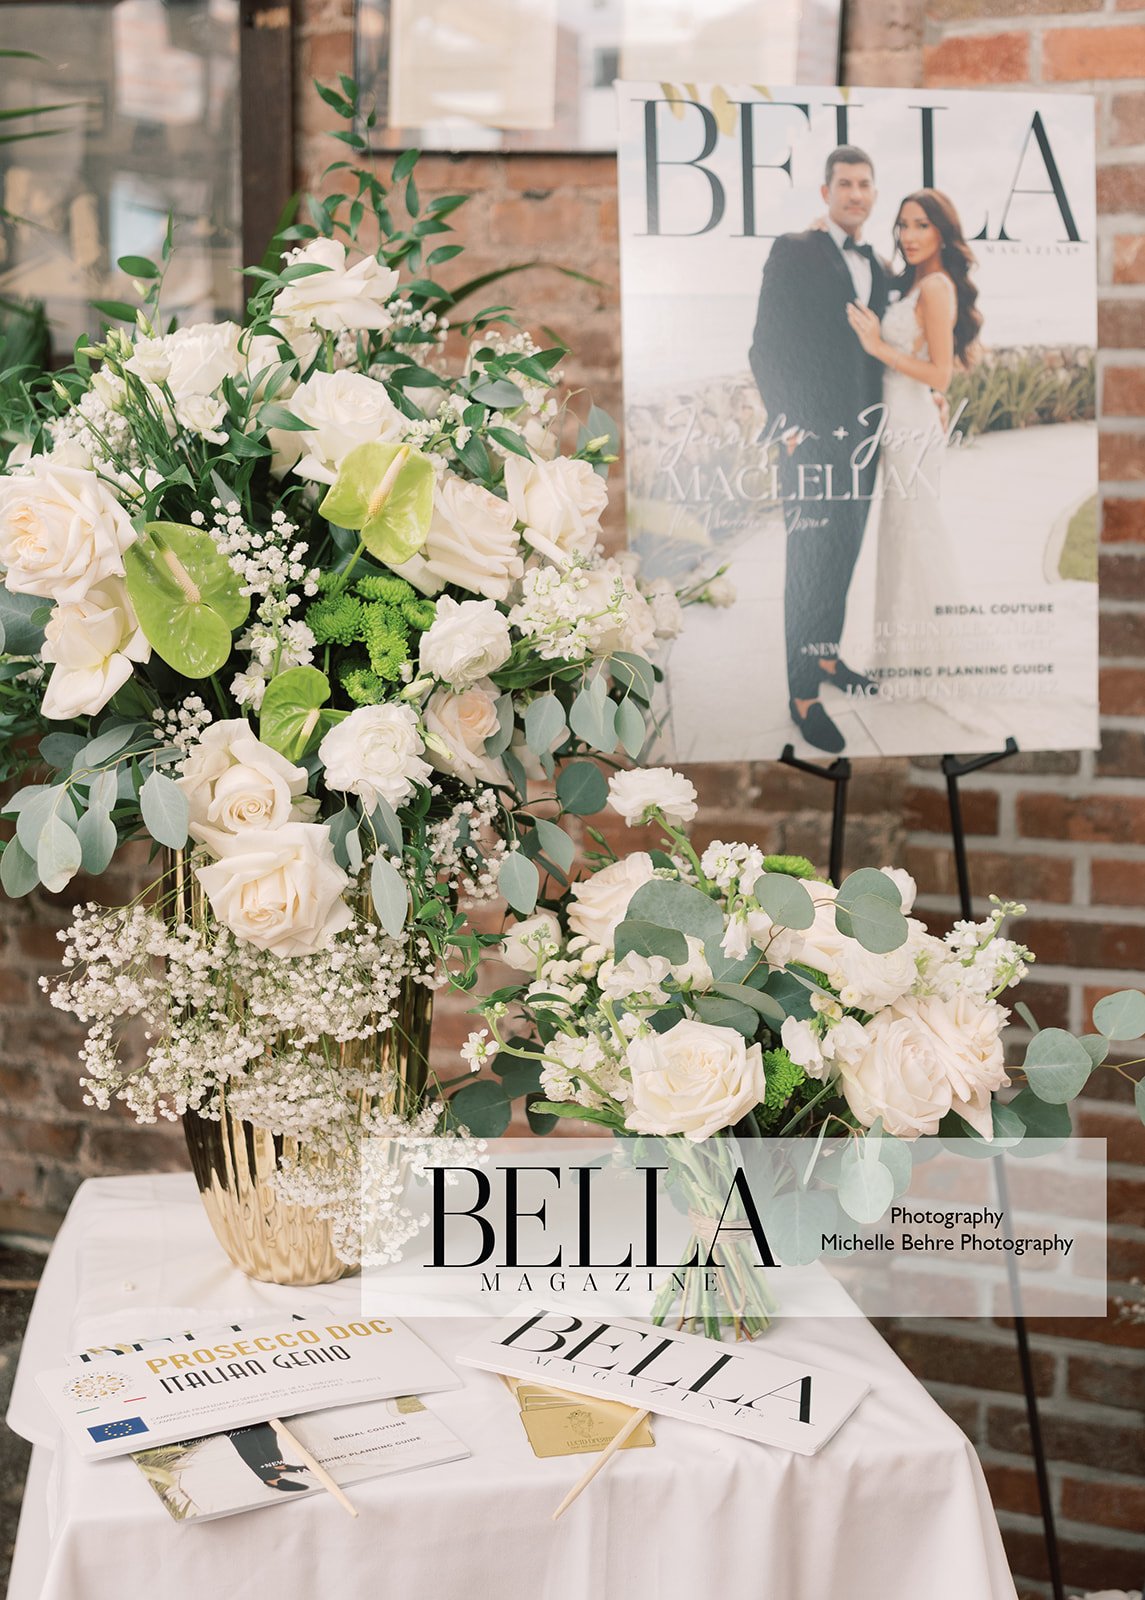 Michelle-Behre-Photography-BELLA-Magazine-Wedding-Event-La-Pulperia-New-York-11.jpg